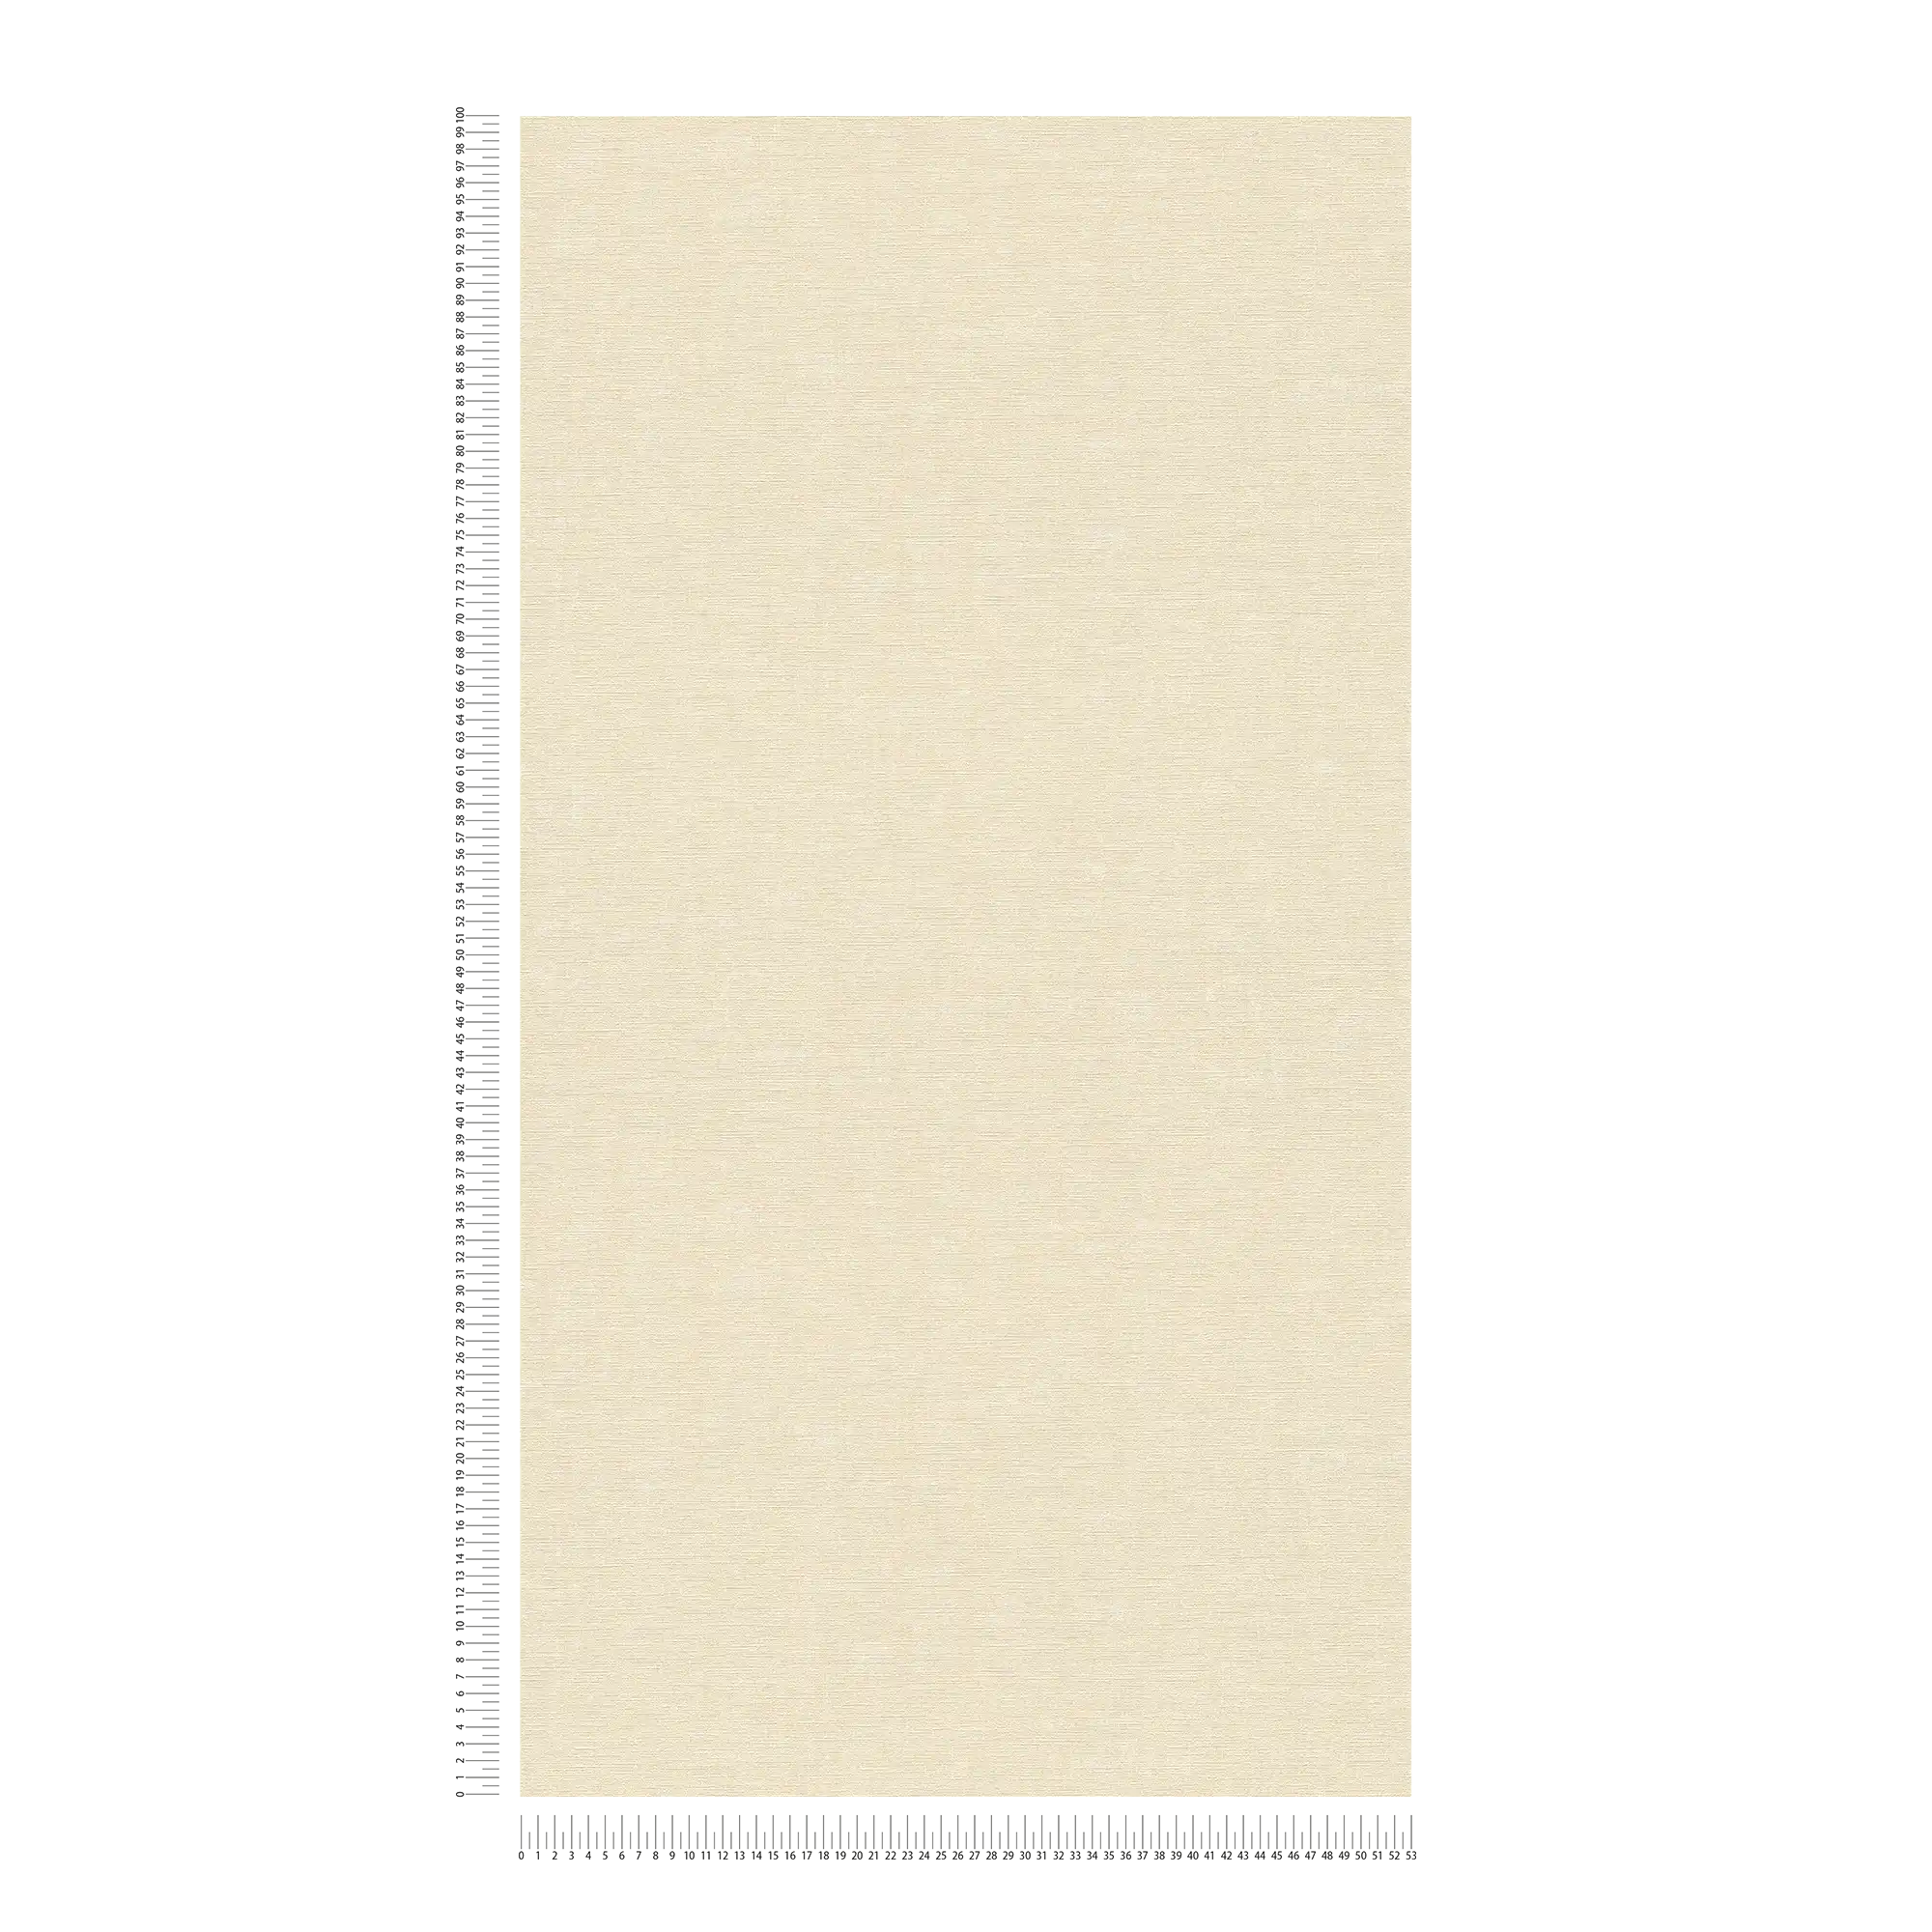             Plain wallpaper with mottled pattern - cream, beige
        